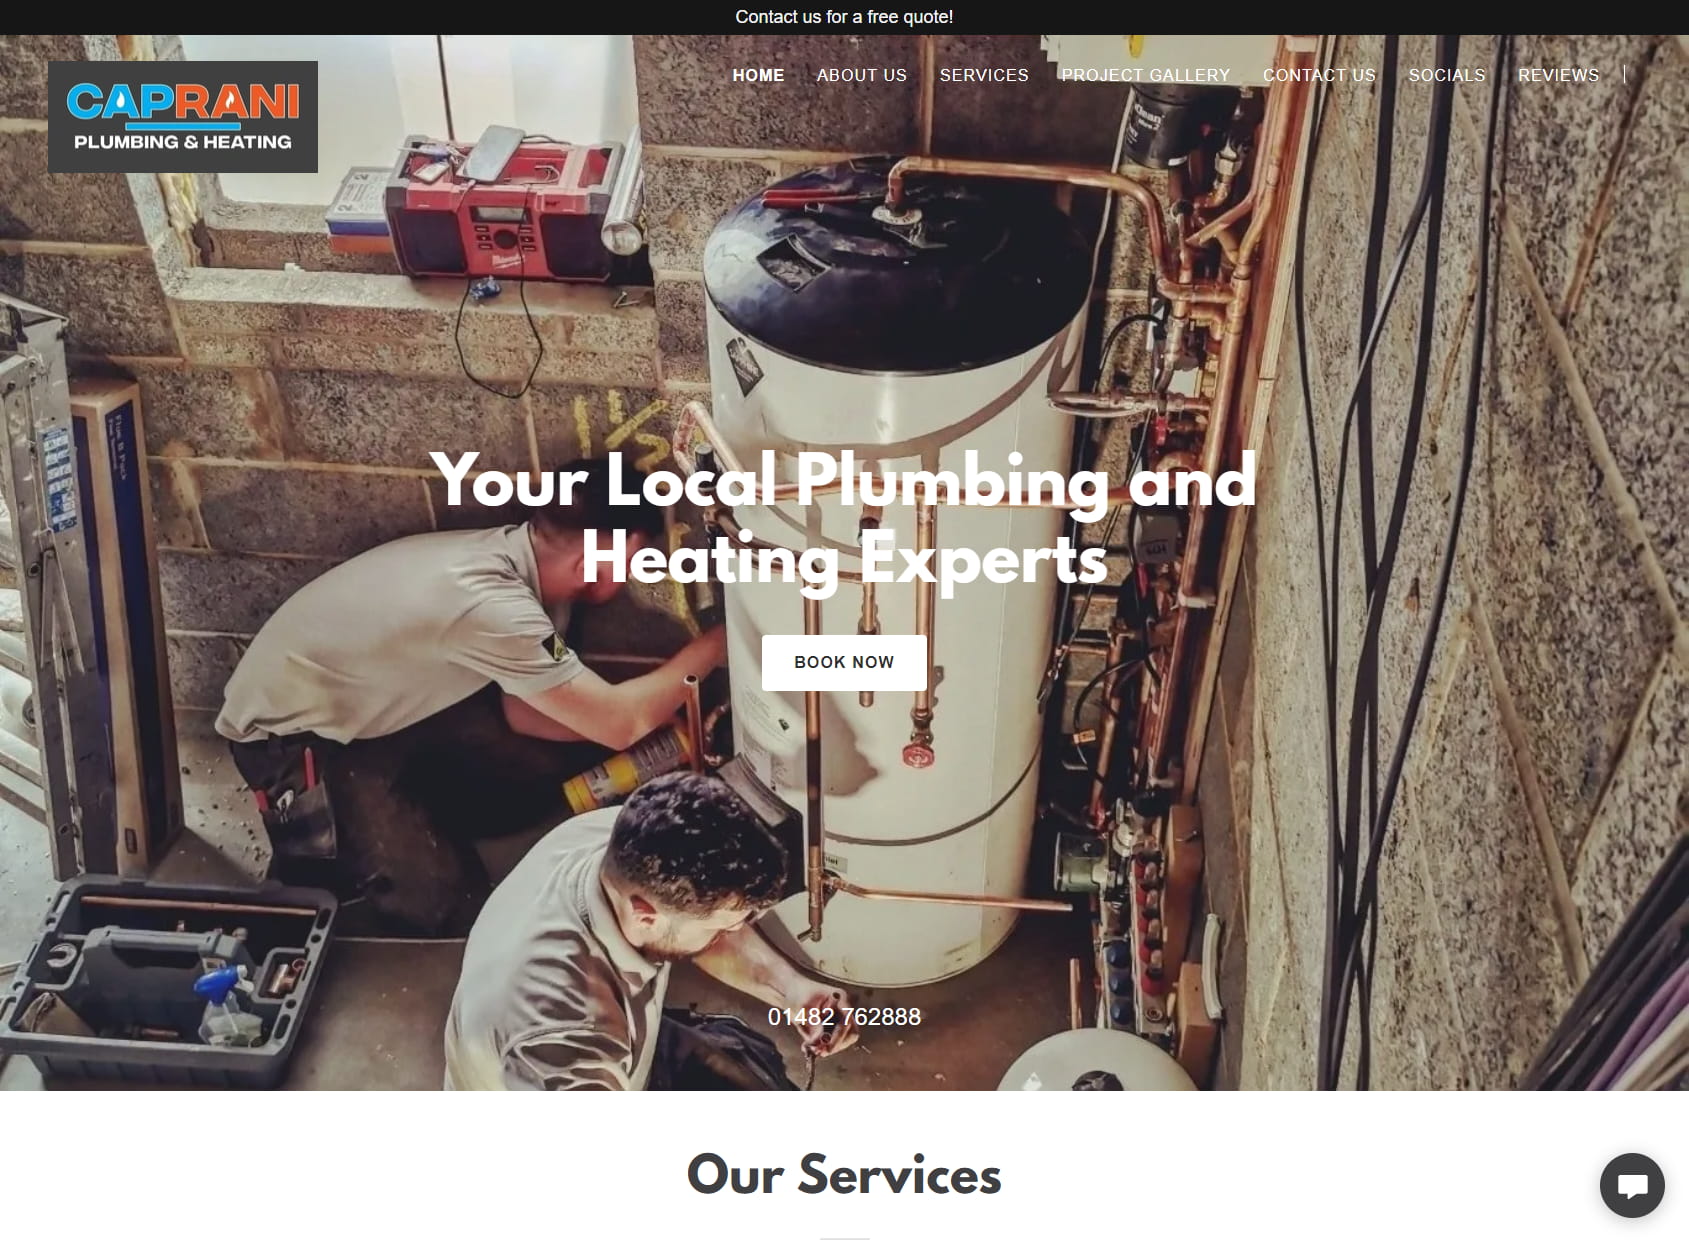 Caprani Plumbing & Heating Limited